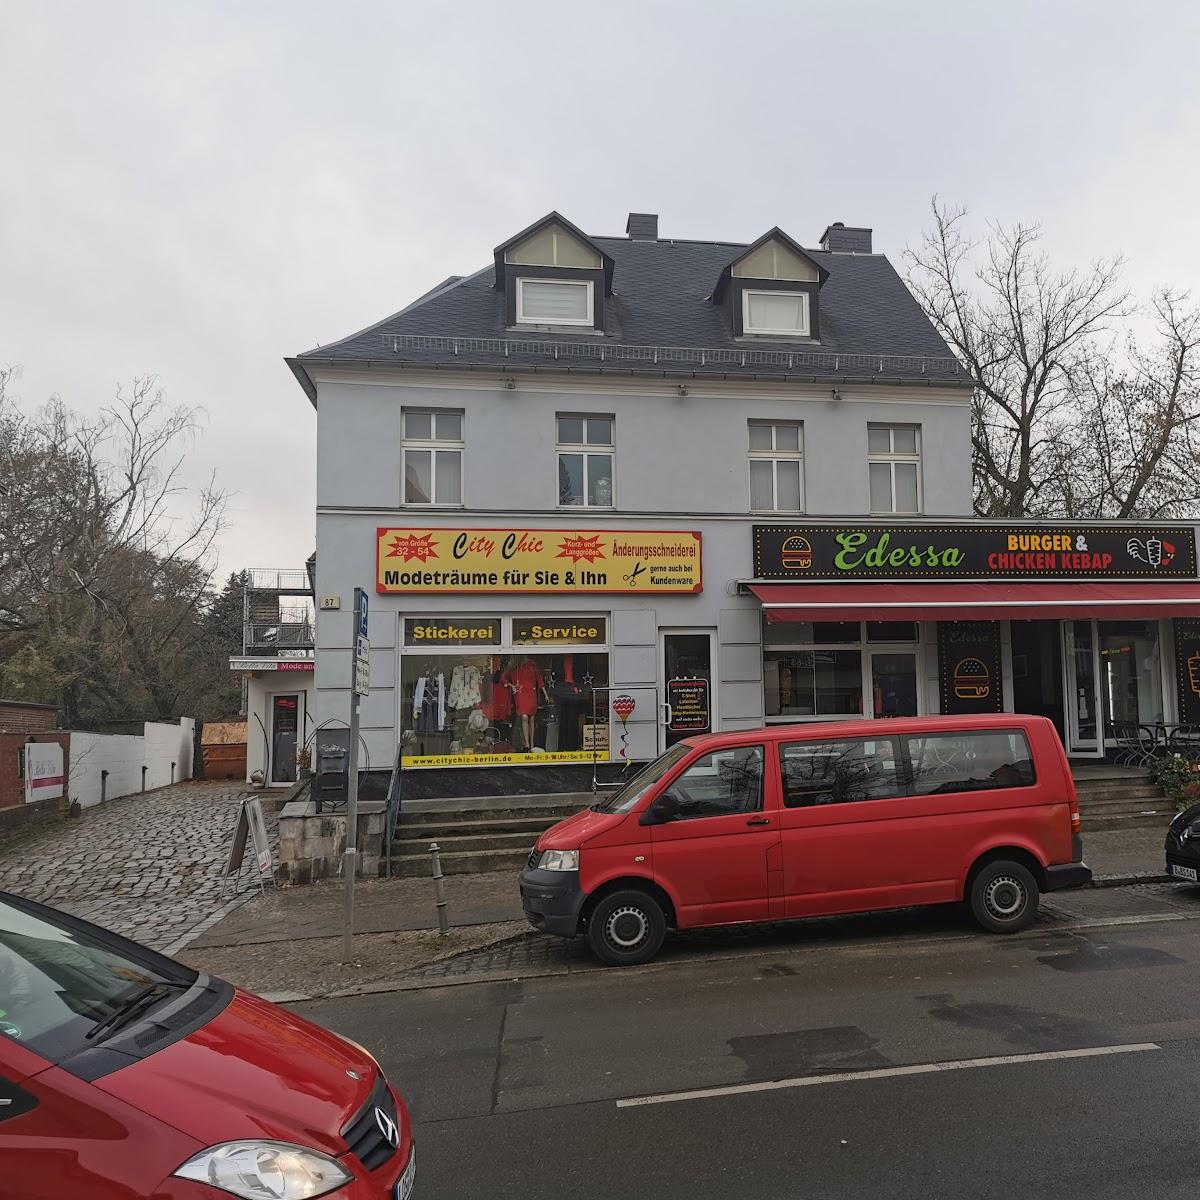 Restaurant "American Burger" in Berlin